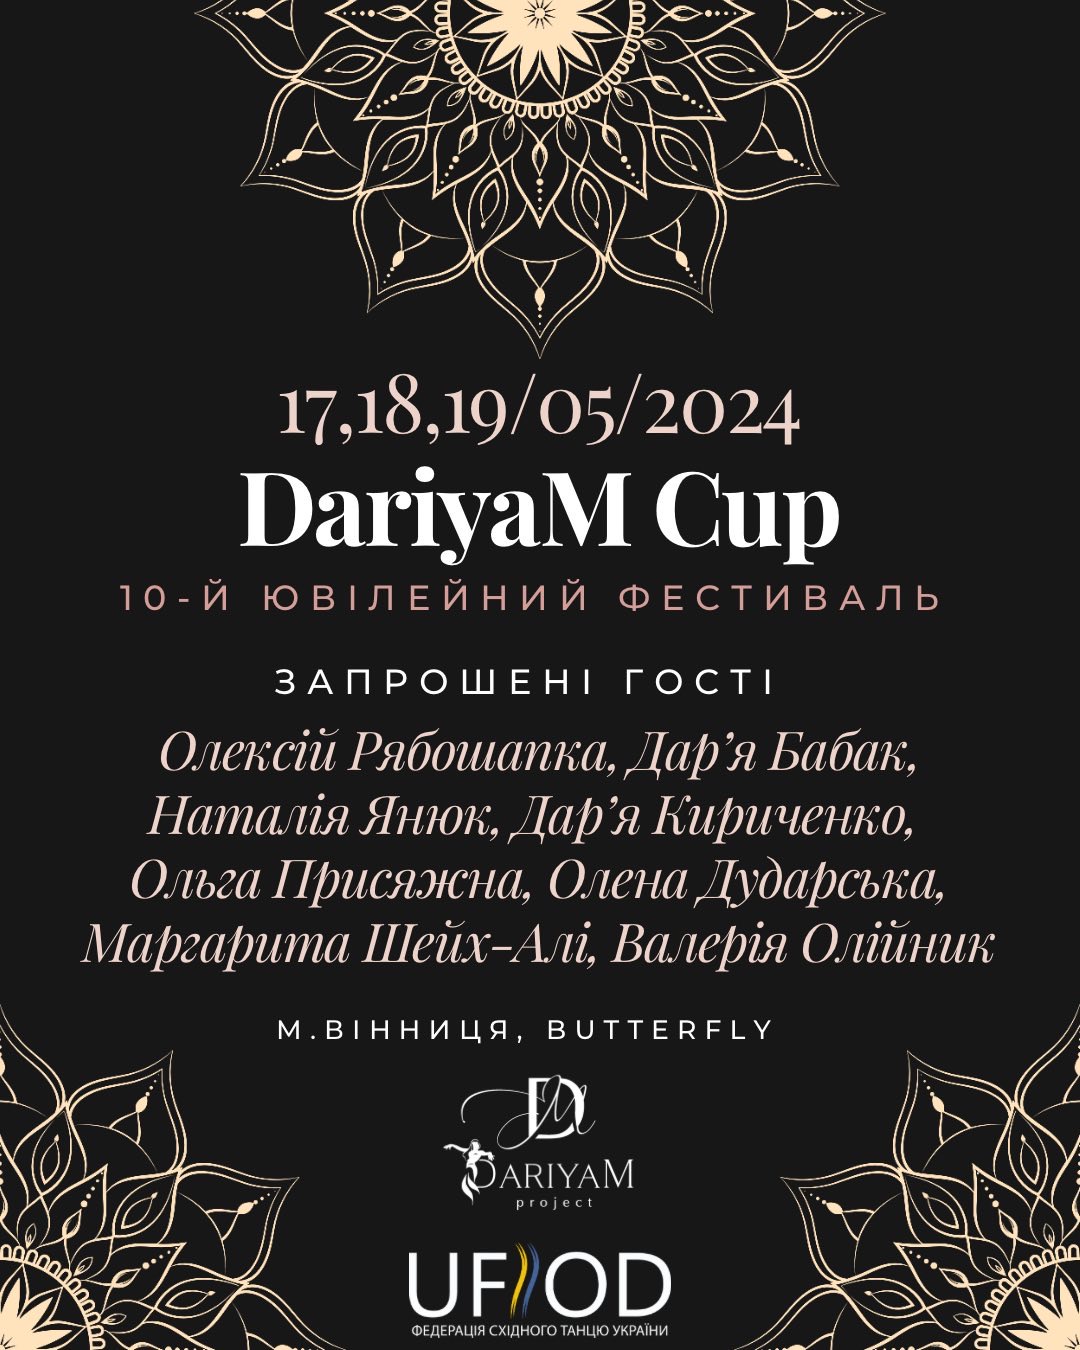 DARIYAM CUP 2024